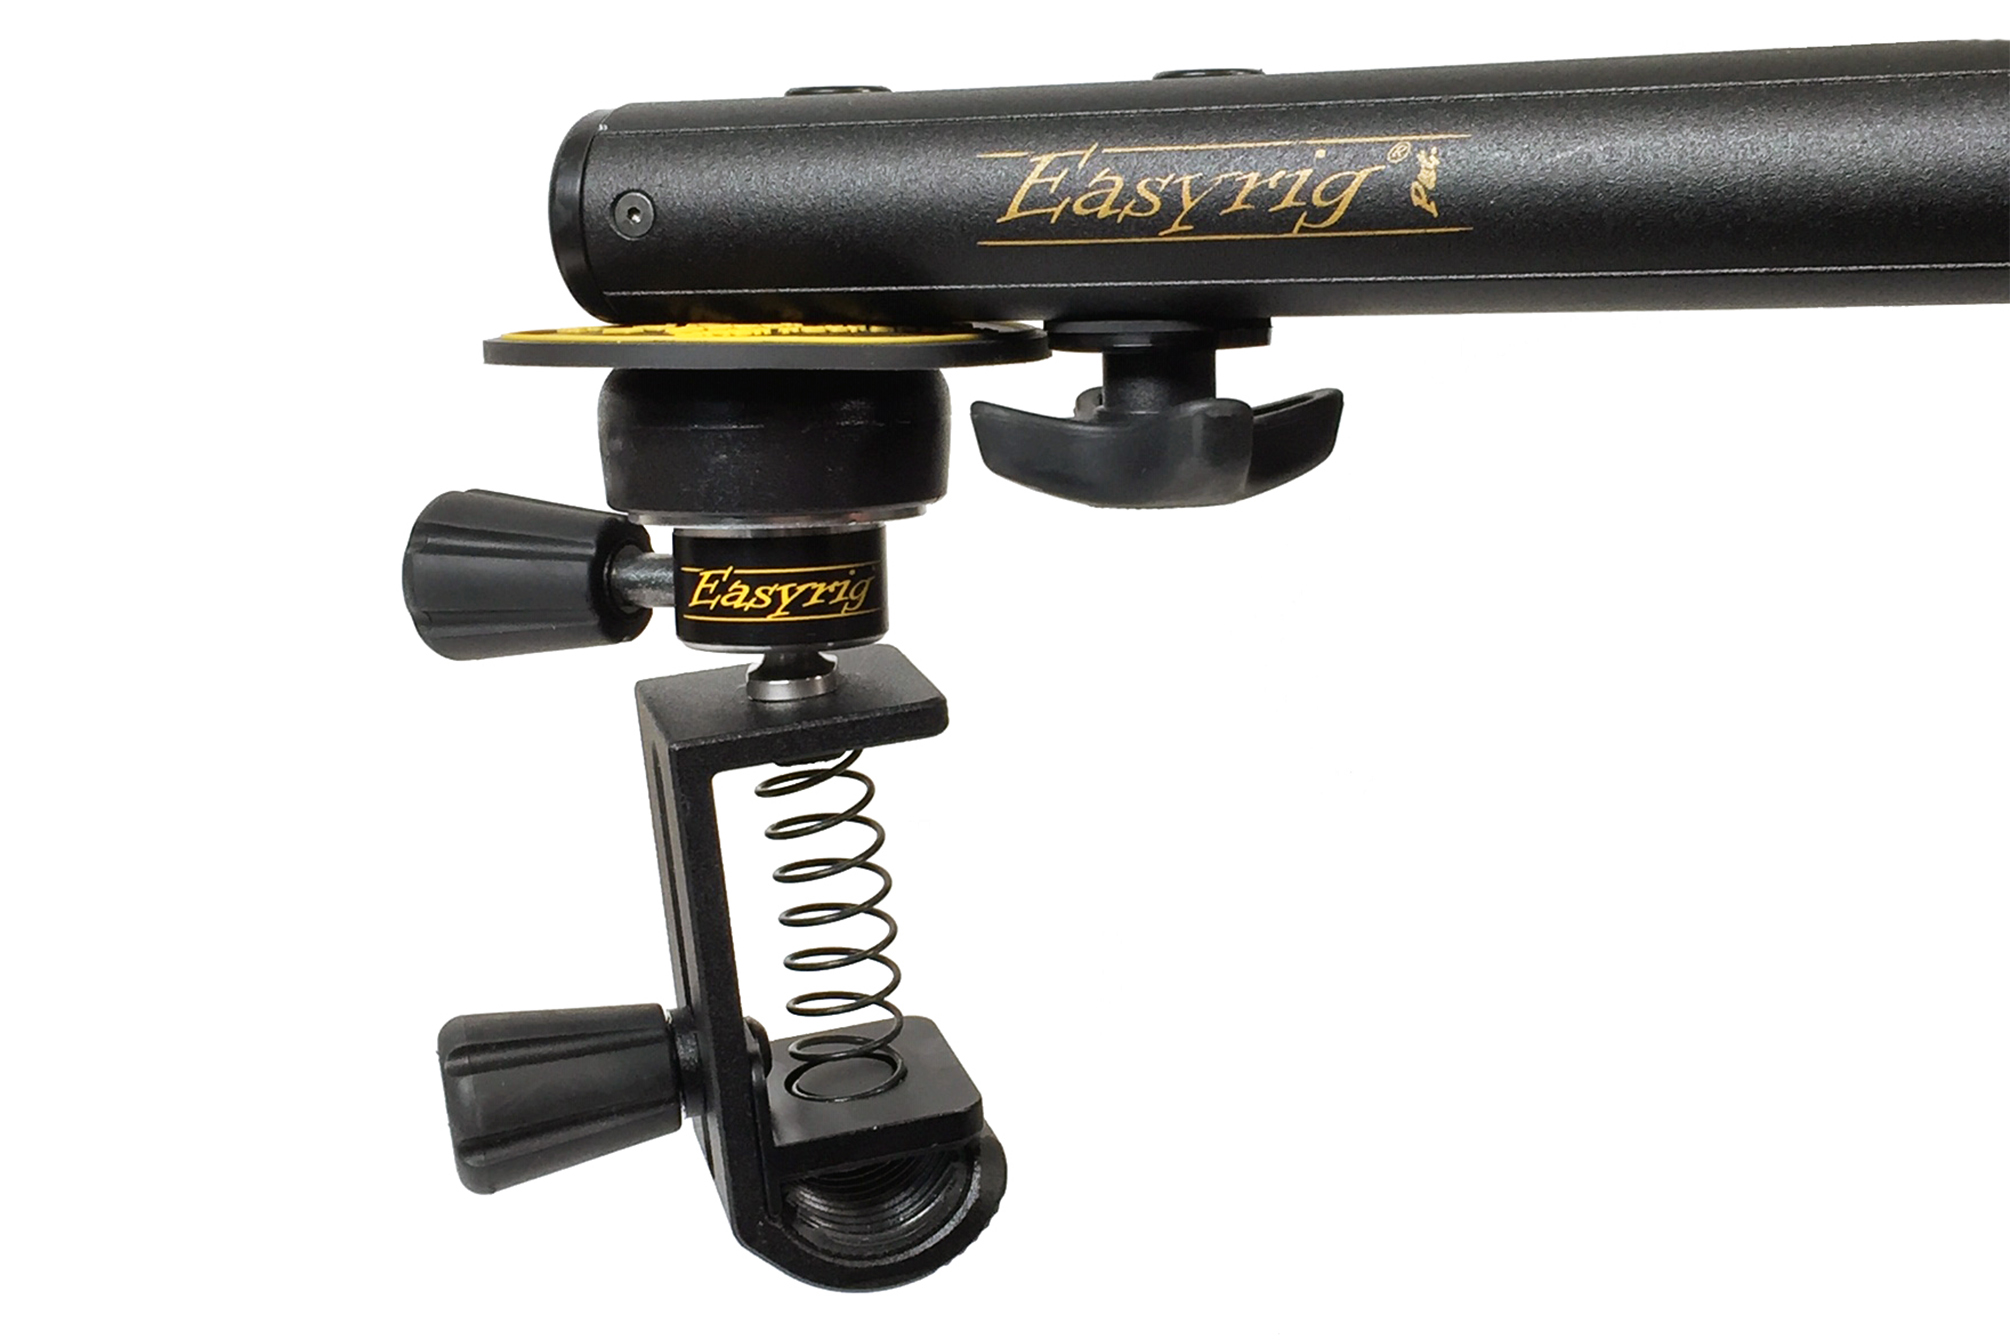 Easyrig Camera Hook with ball stud mounted